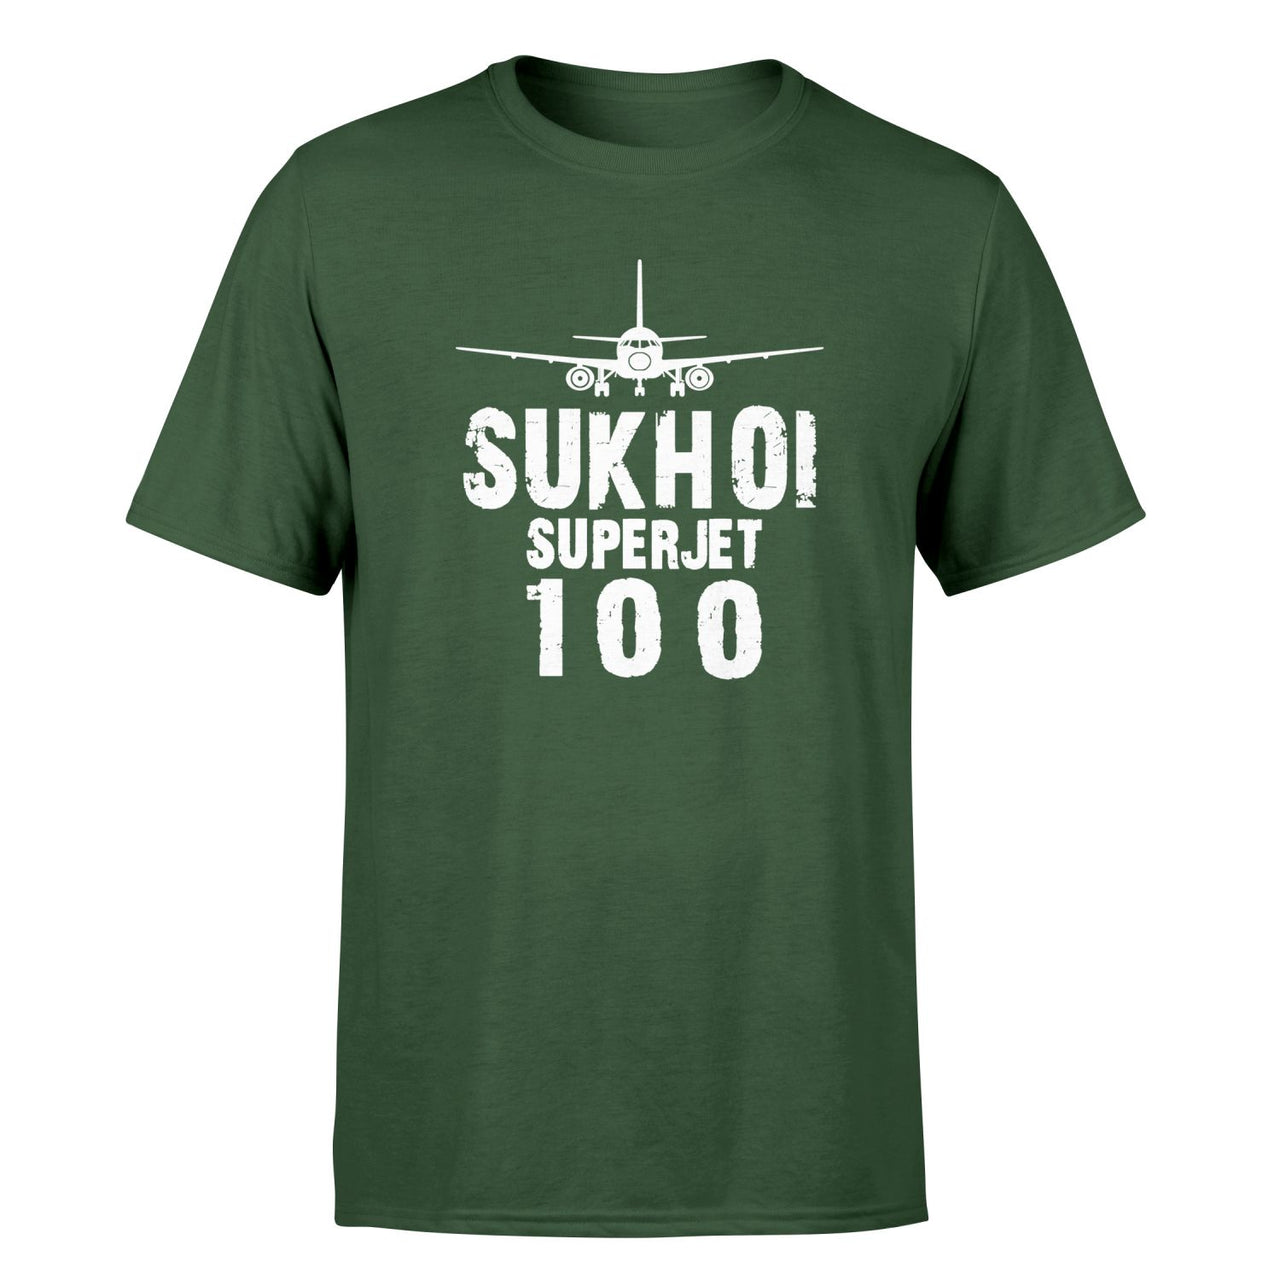 Sukhoi Superjet 100 & Plane Designed T-Shirts